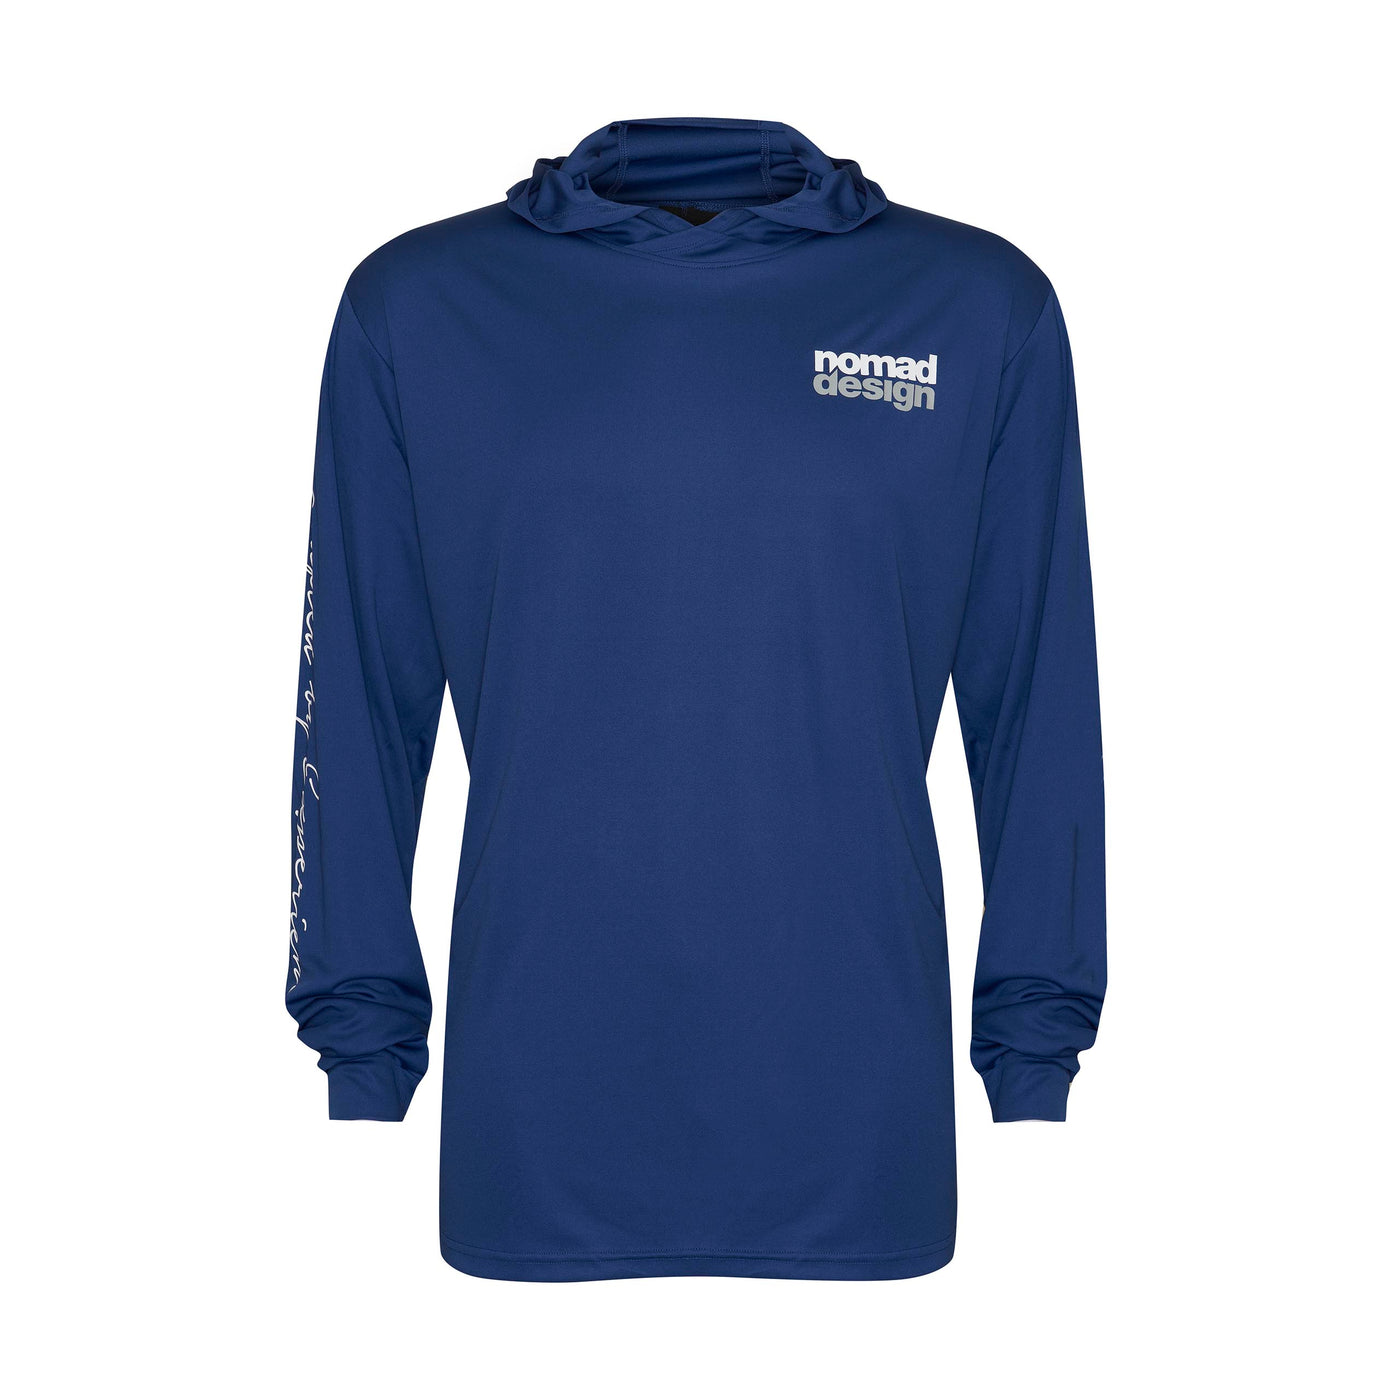 Tech Fishing Shirt Hooded - Wayfarer Marine Blue XXX Large